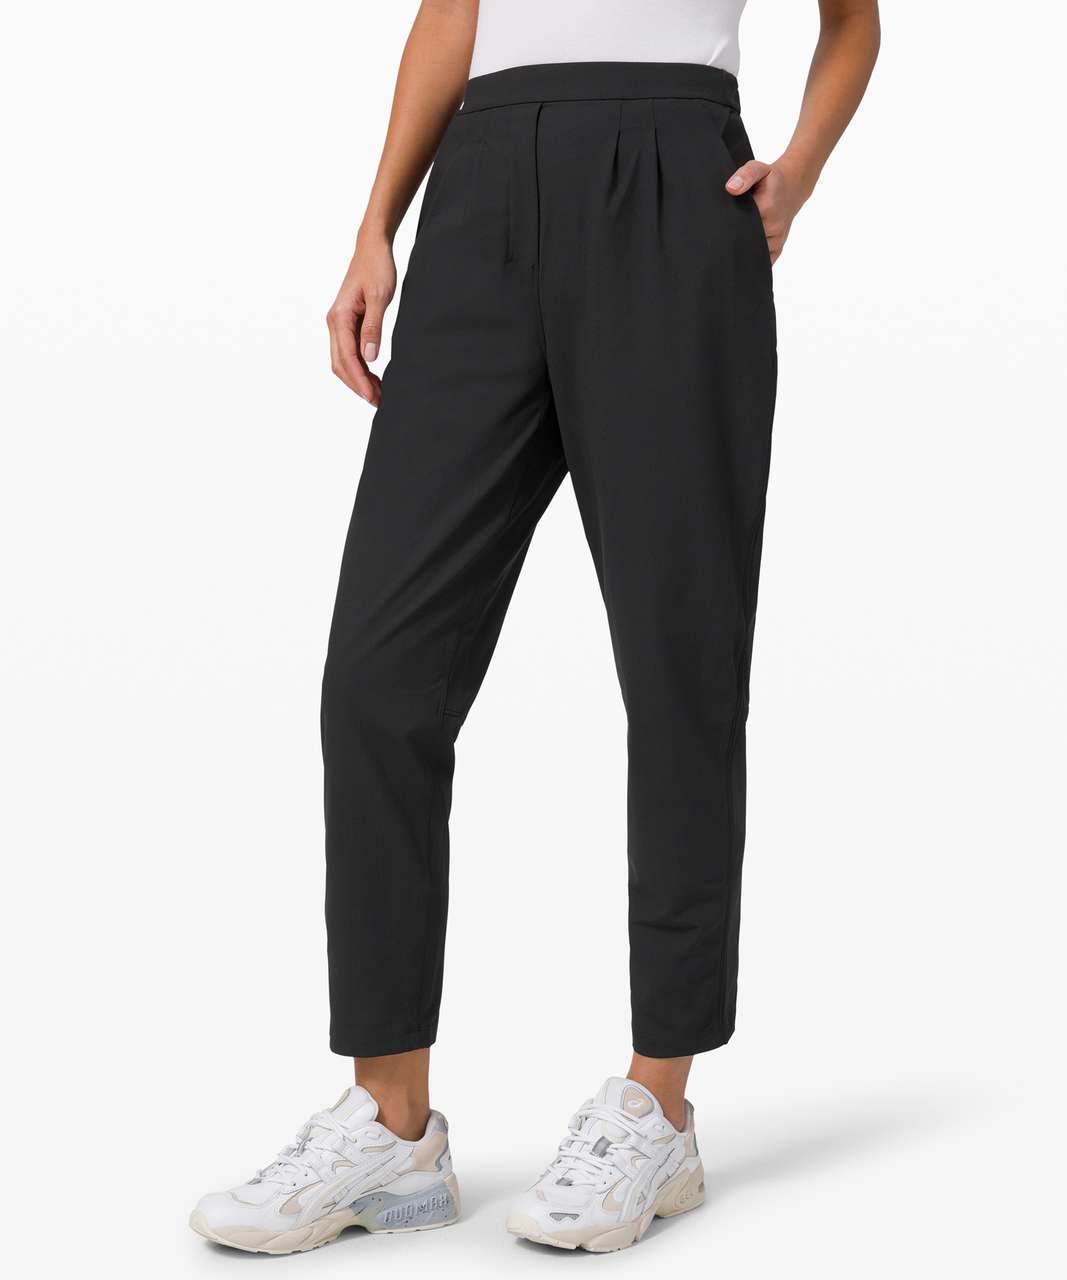 Louise Pants in black - high-waist pants with belt loops – Róu So